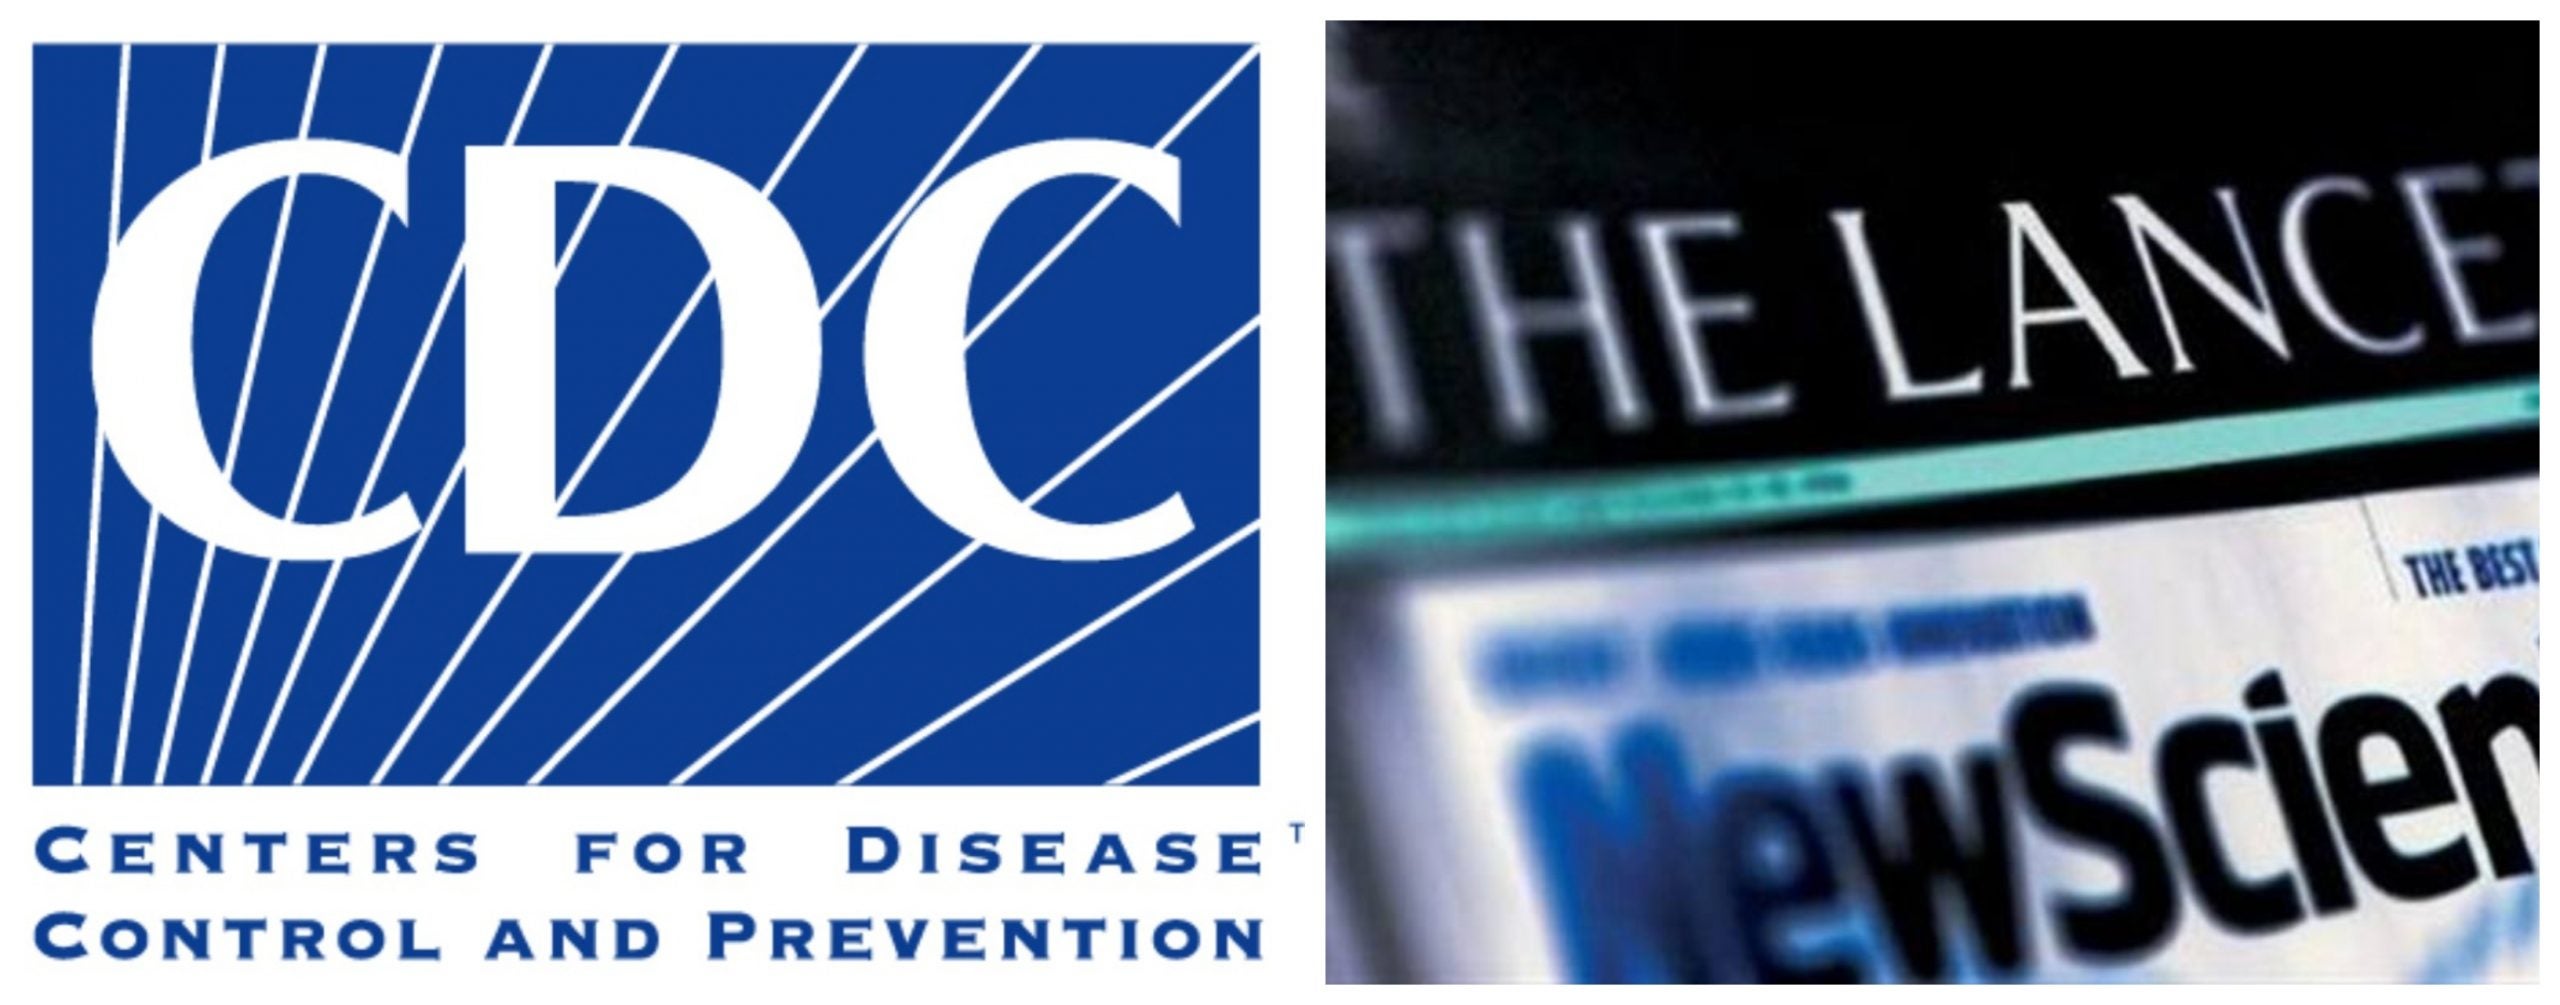 CDC explica estudio en The Lancet.